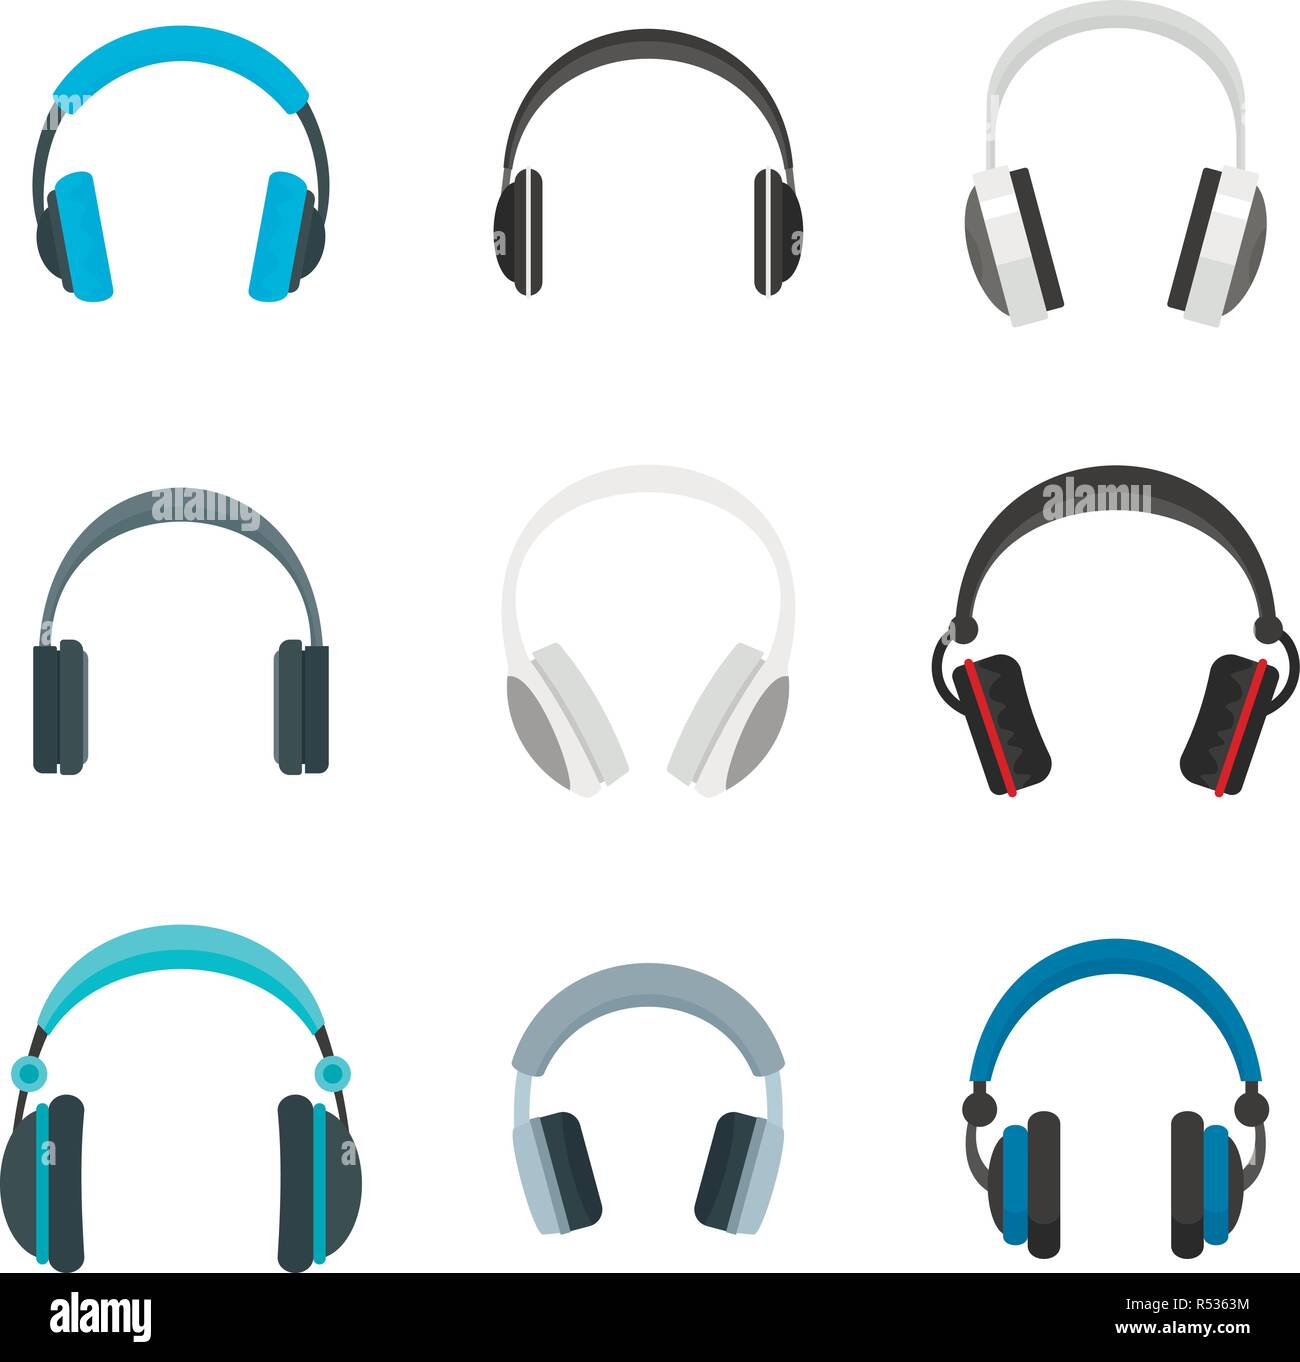 Kopfhörer Musik hören Lautsprecher headset Symbole gesetzt. Flache  Abbildung: 9 Kopfhörer Musik hören Lautsprecher headset Vector Icons für  Web Stock-Vektorgrafik - Alamy